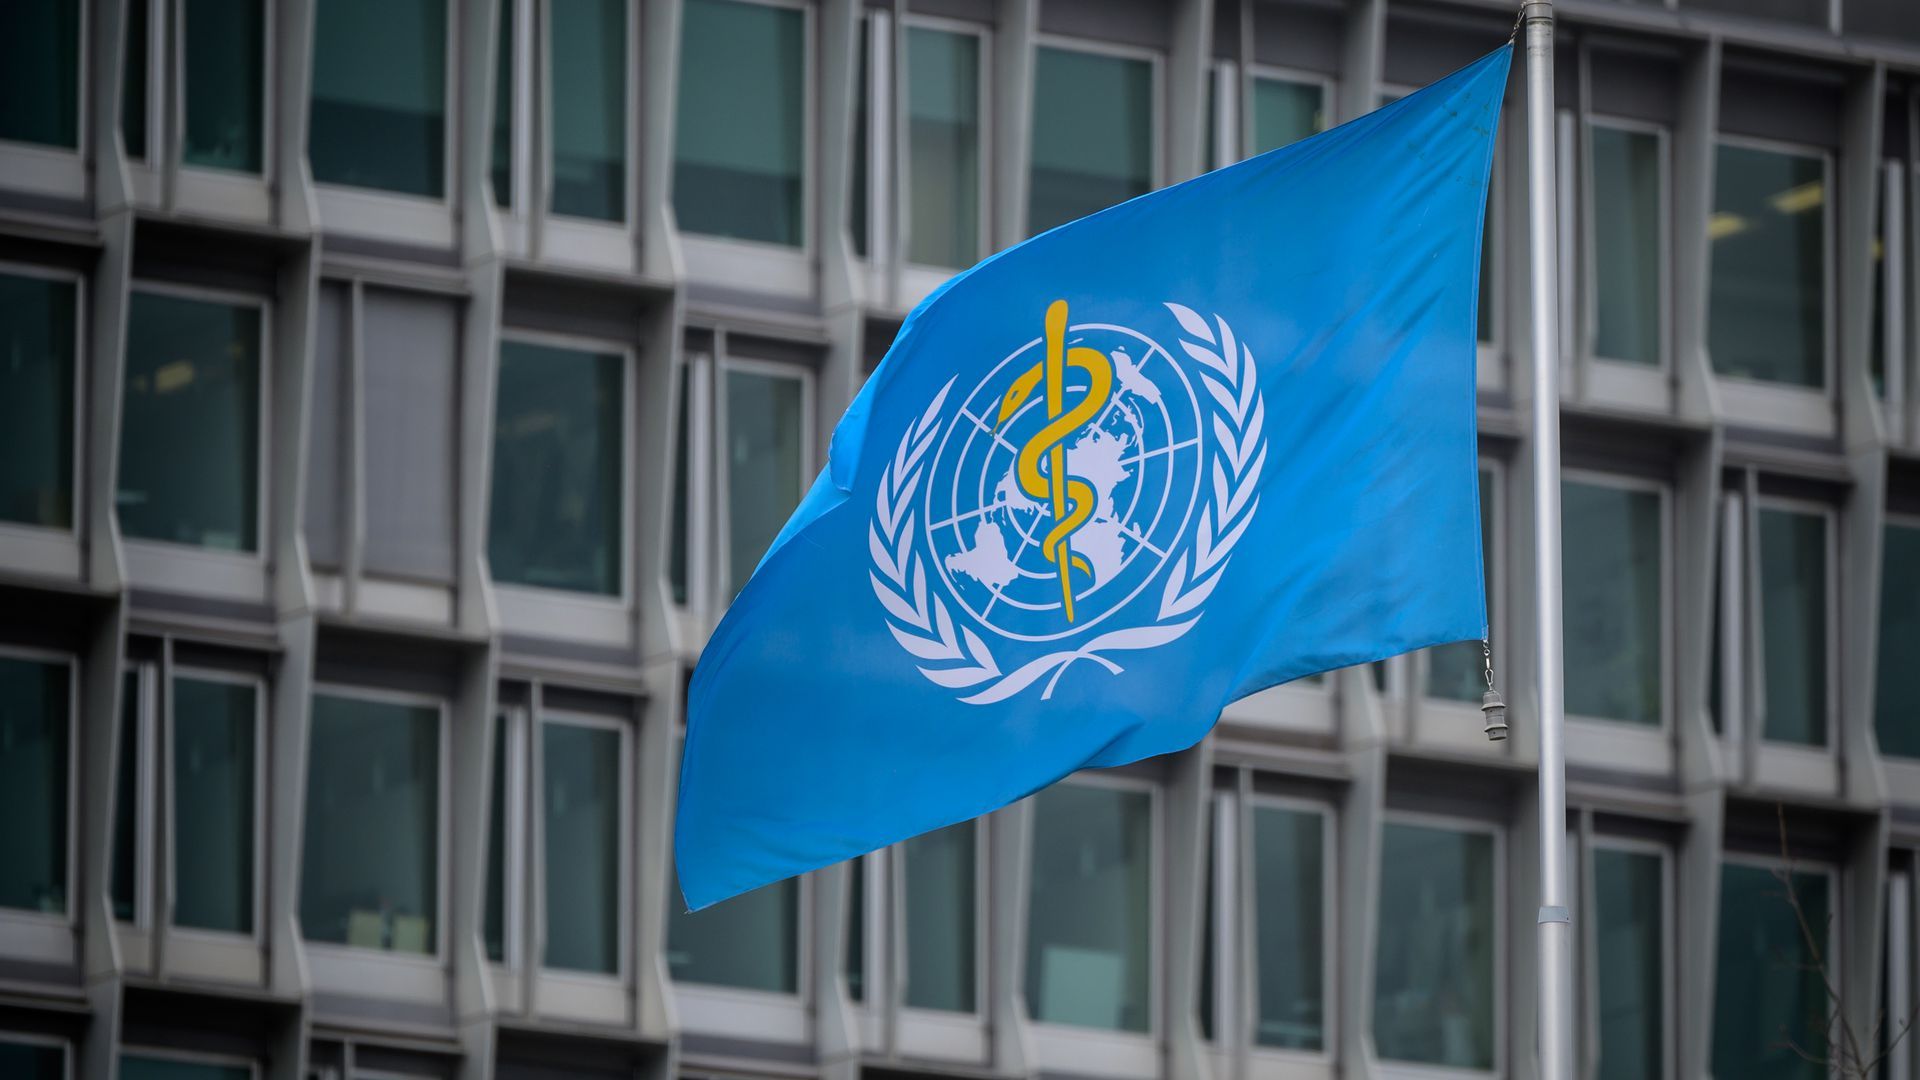 The WHO's headquarters in Geneva.